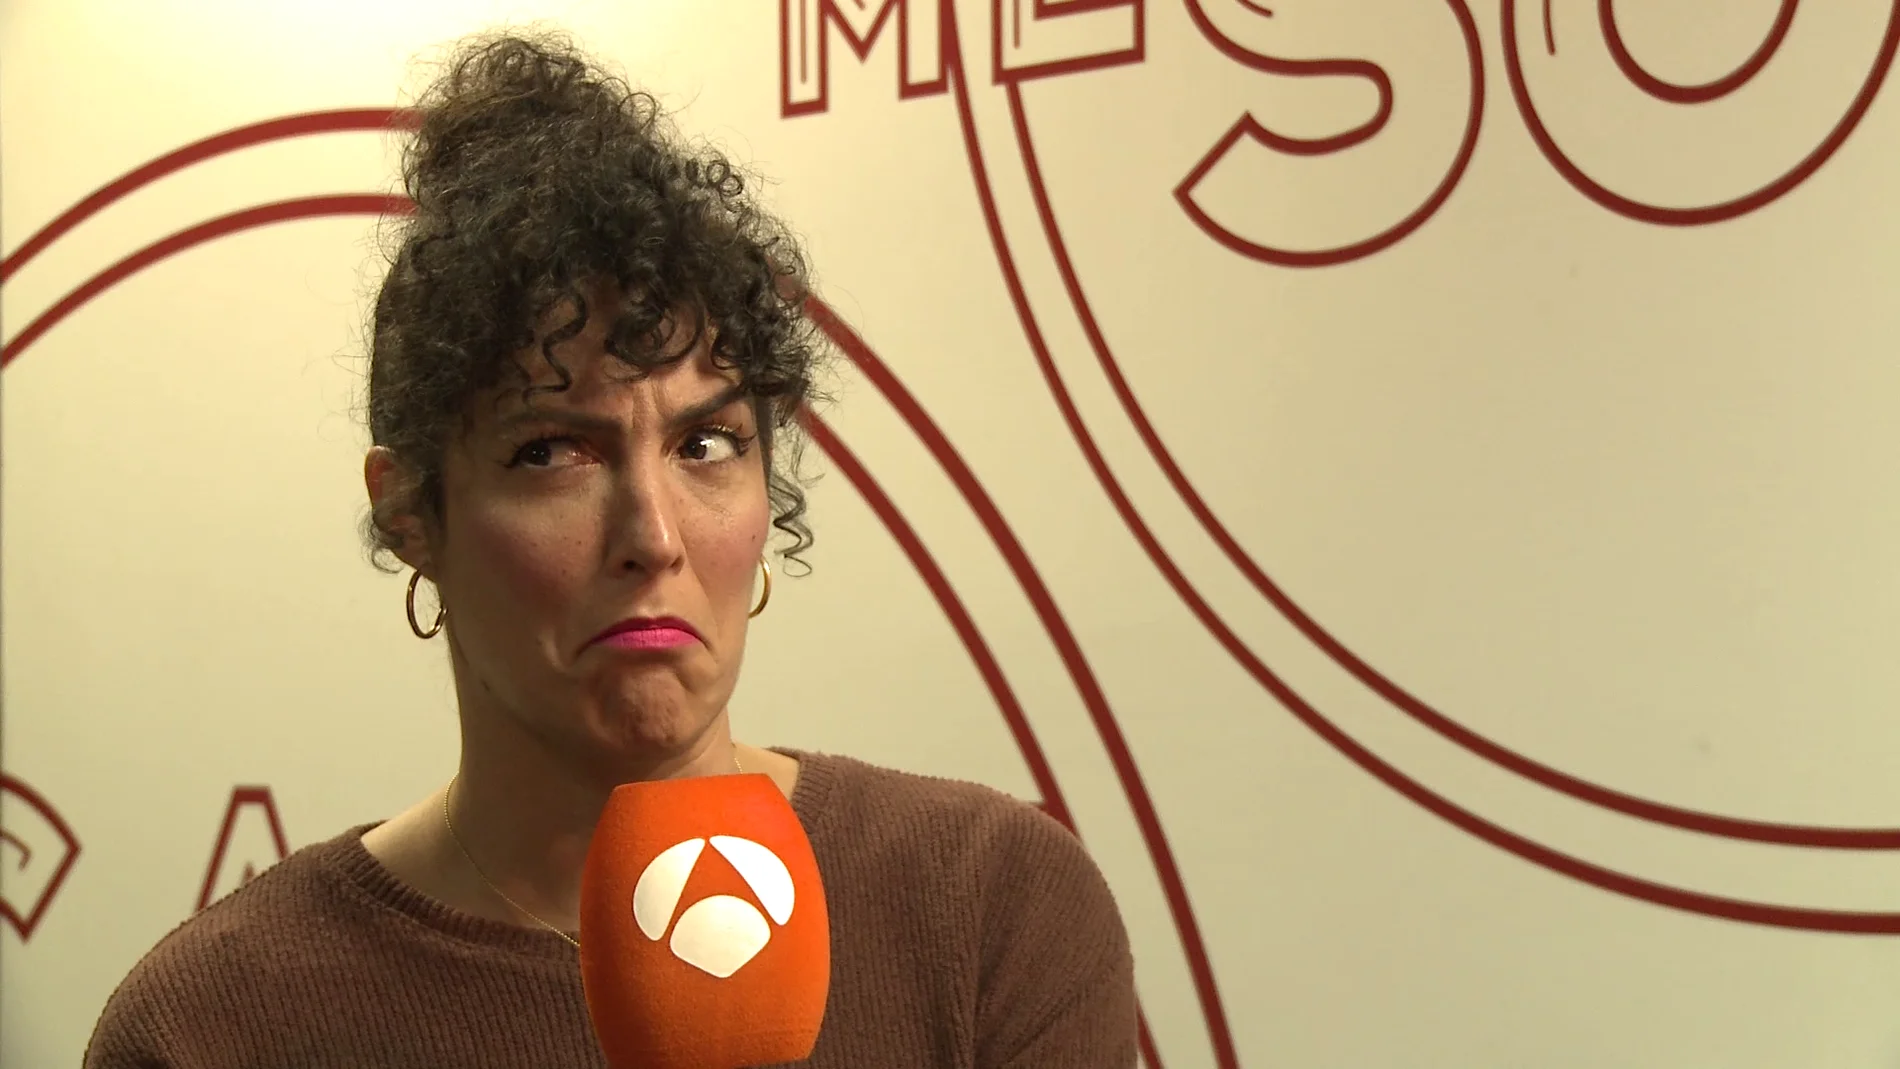 La primera vez de Rocío Madrid: "Me dio asco"